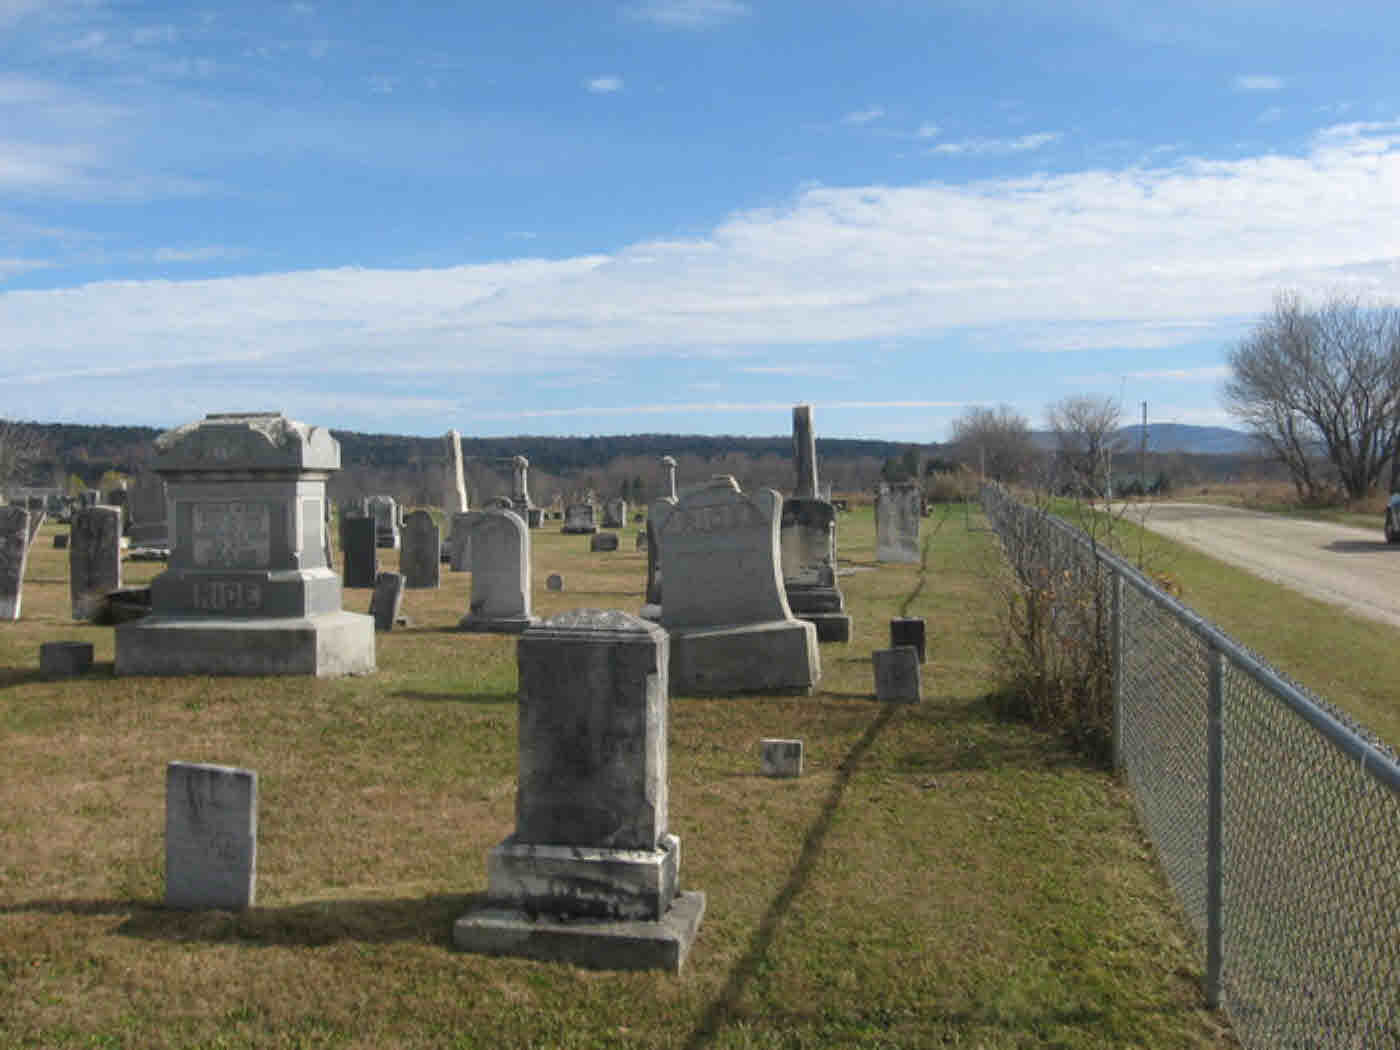 North Ridge Cemetery